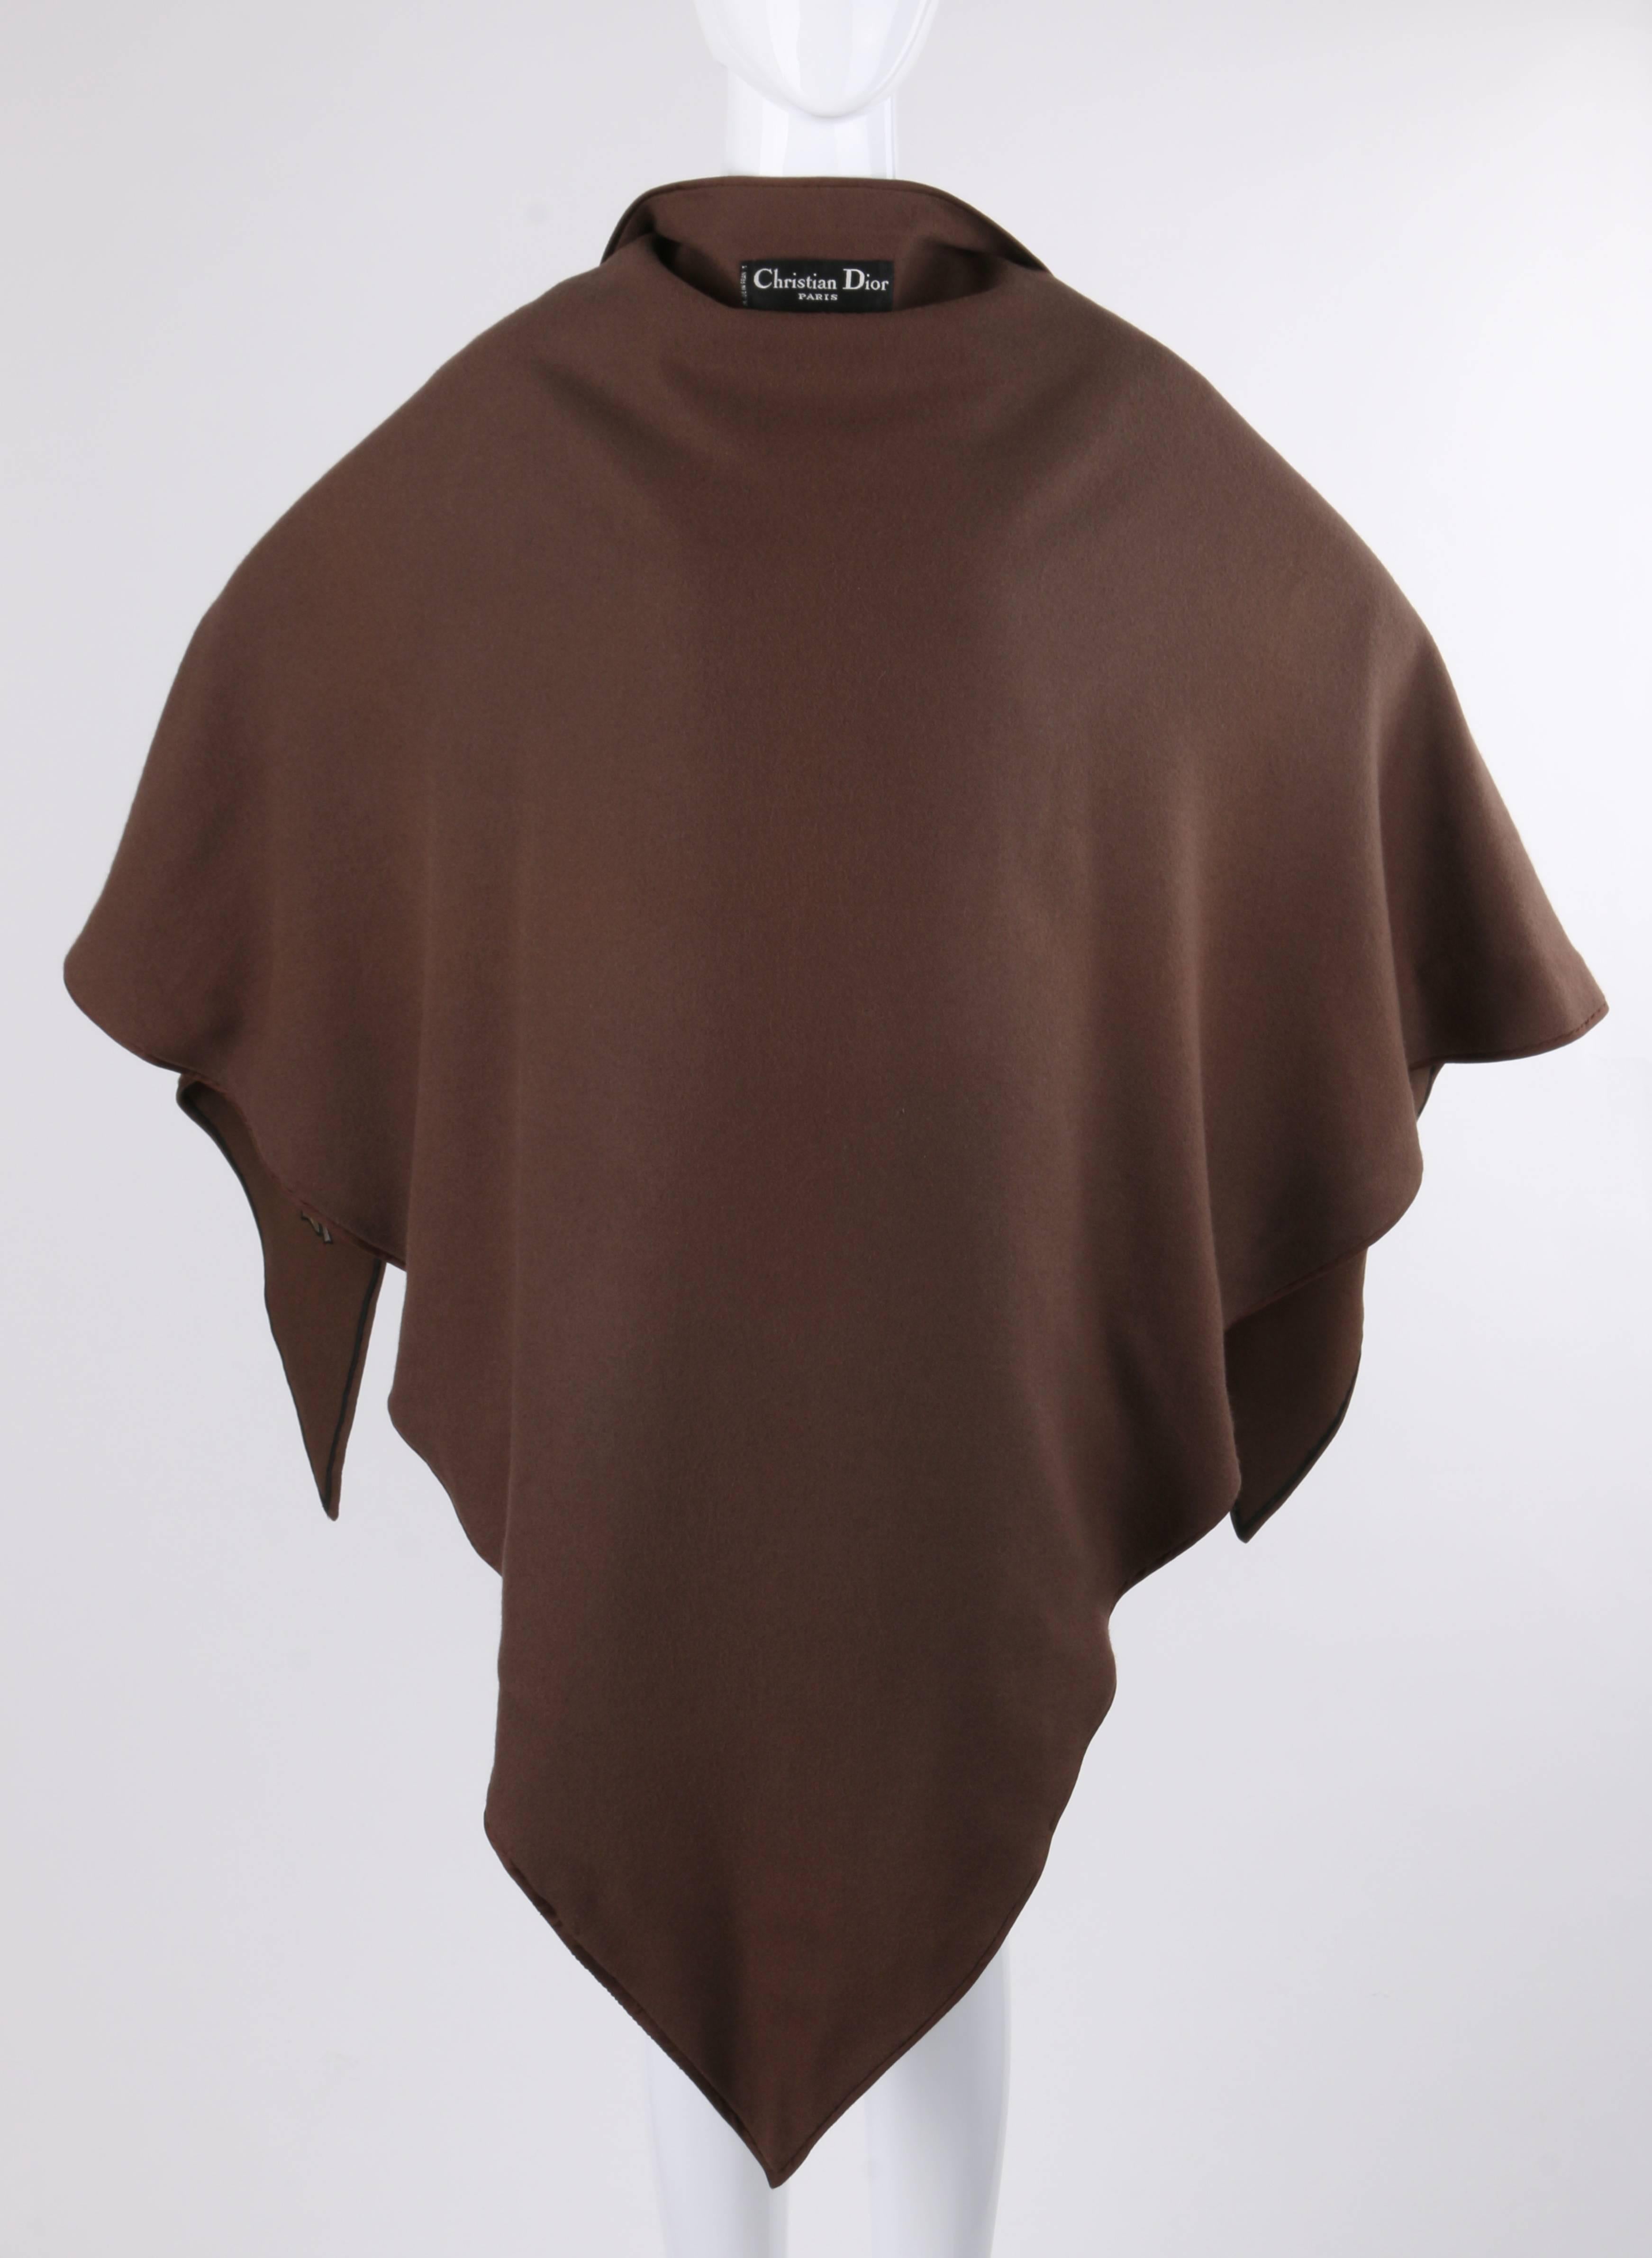 CHRISTIAN DIOR c.1970's Brown Wool & Leather Fan Applique Shawl Cape RARE 1